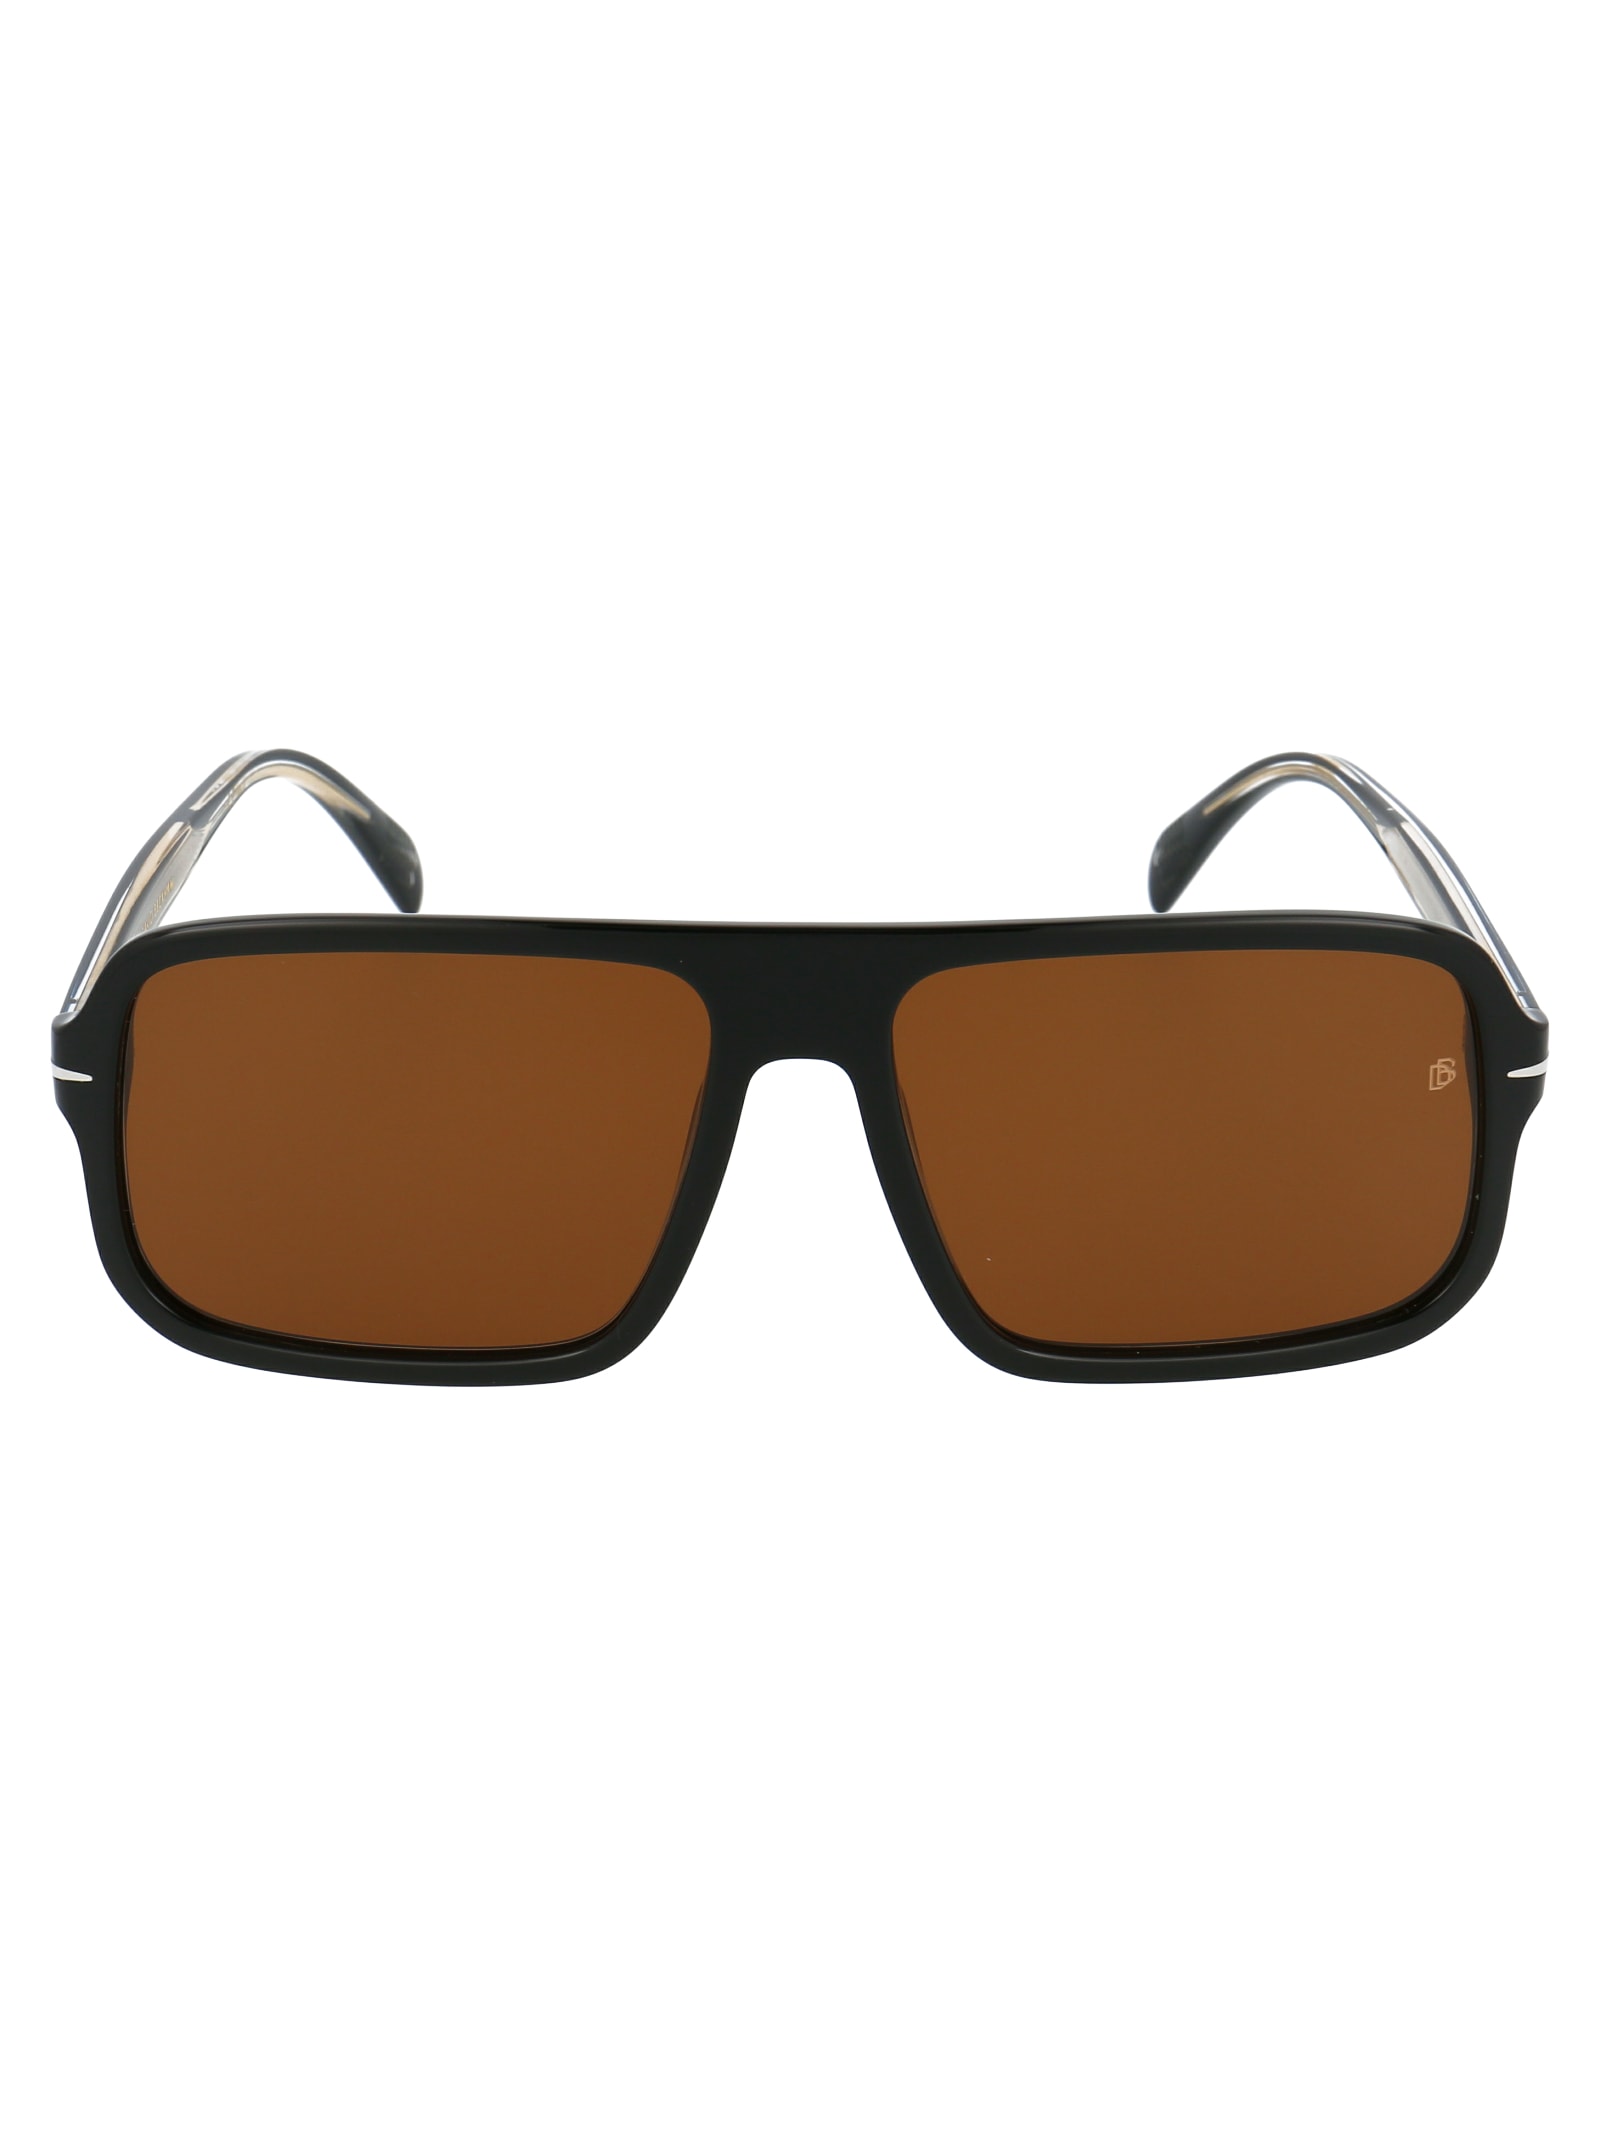 DB Eyewear by David Beckham Db 7007/s Sunglasses